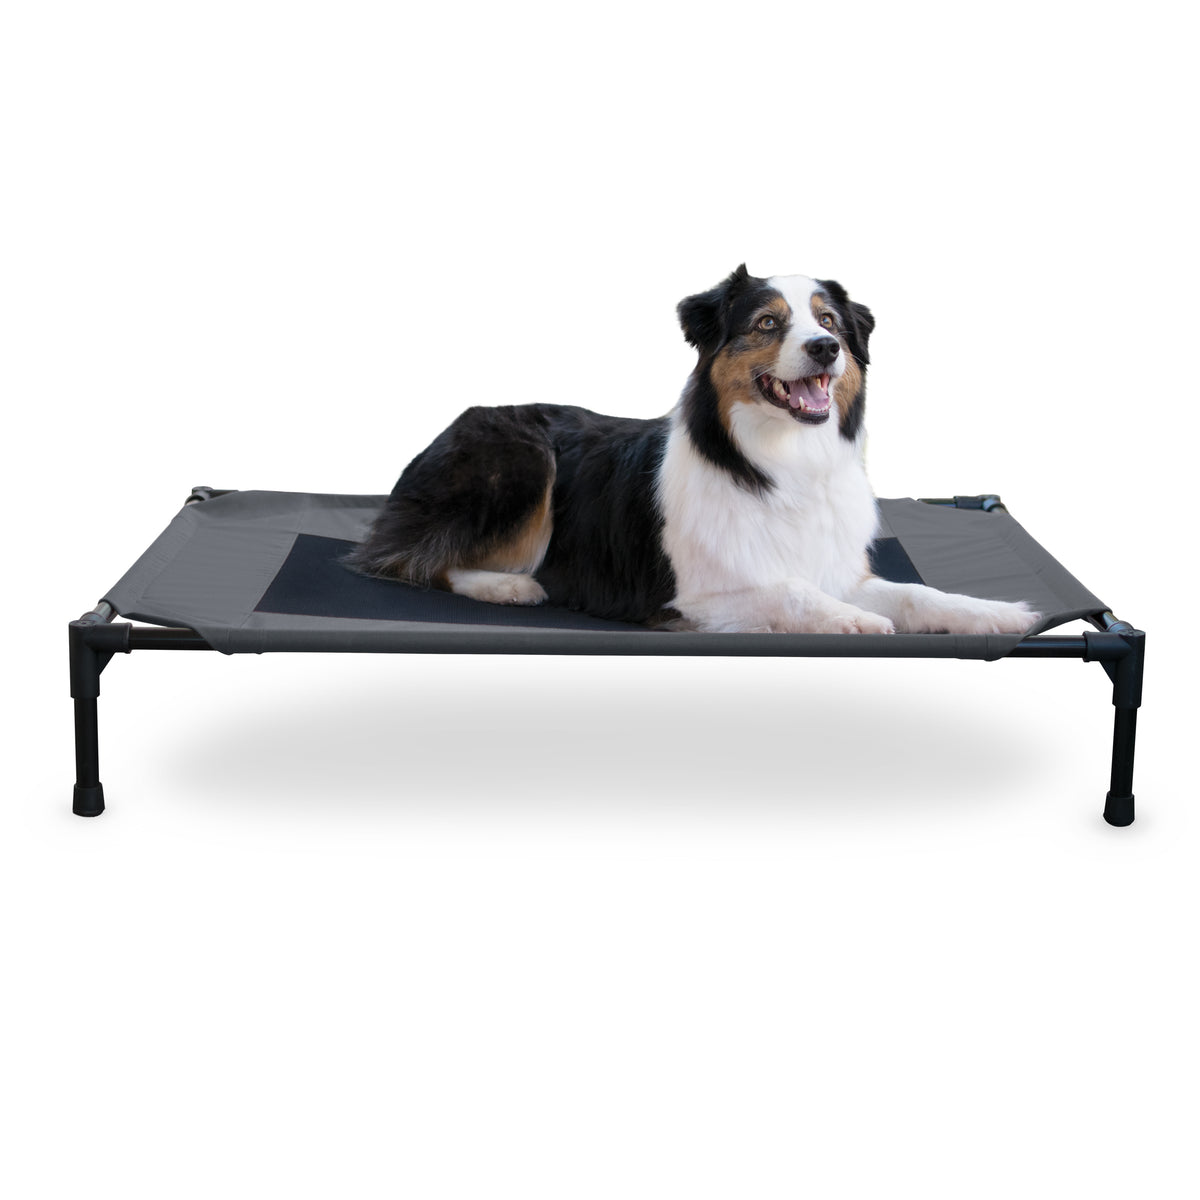 K&H Pet Products Original Pet Cot - Raised, Mesh Cooling Dog Bed